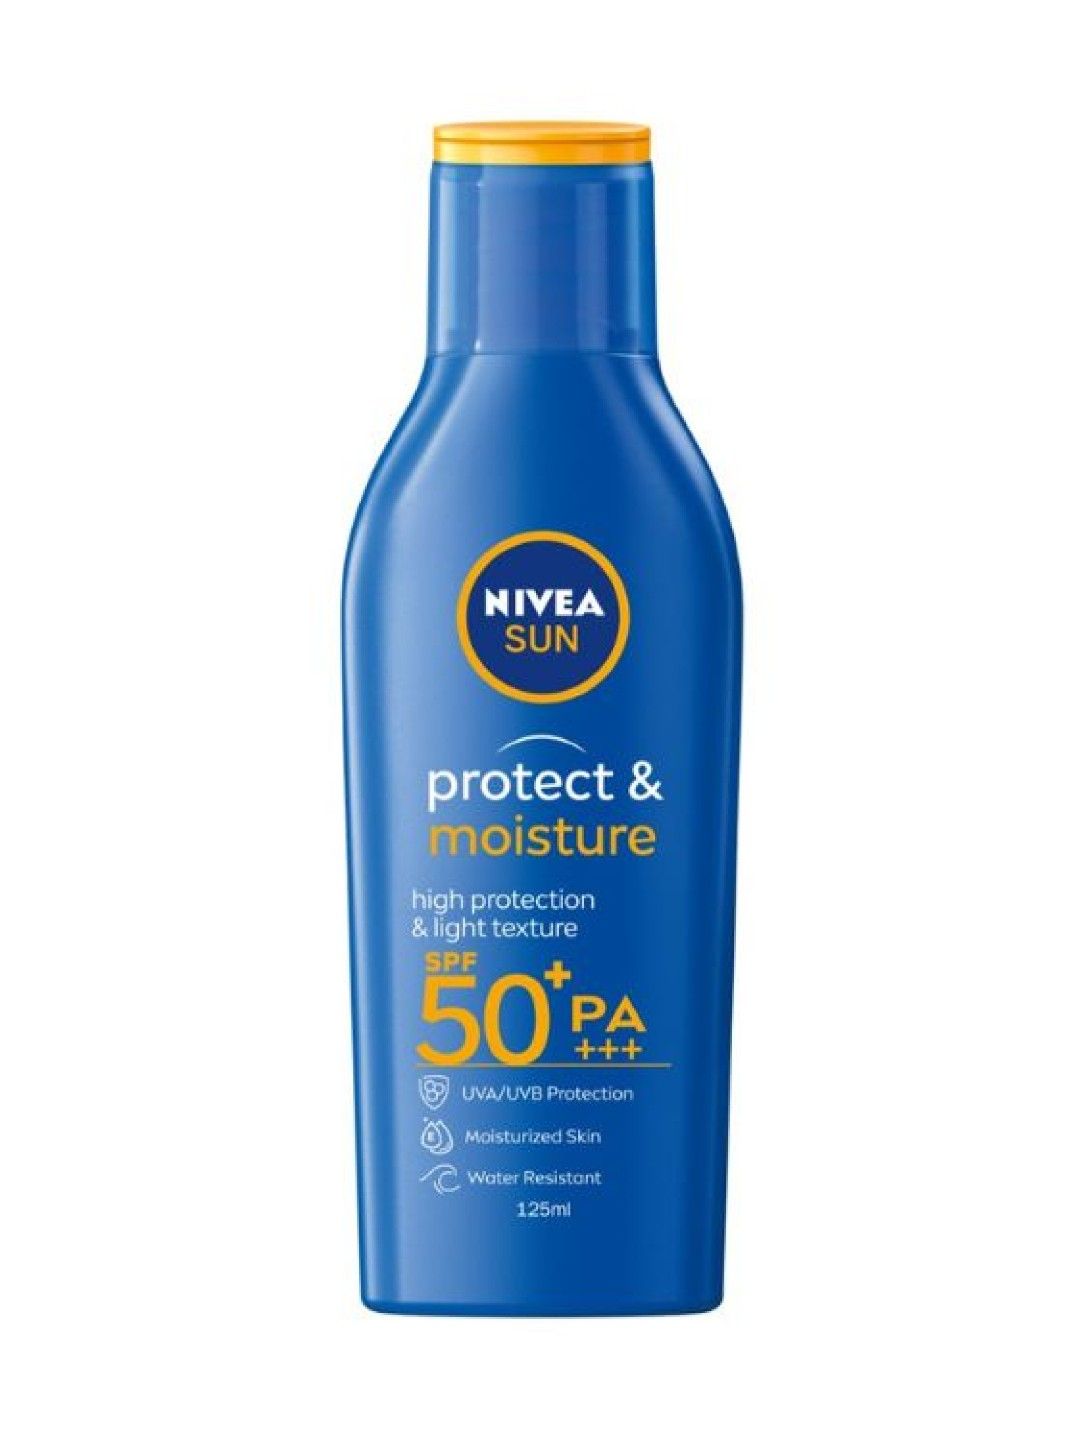 NIVEA Sun Protect & Moisture Sunscreen Lotion w/ SPF 50, 125ml